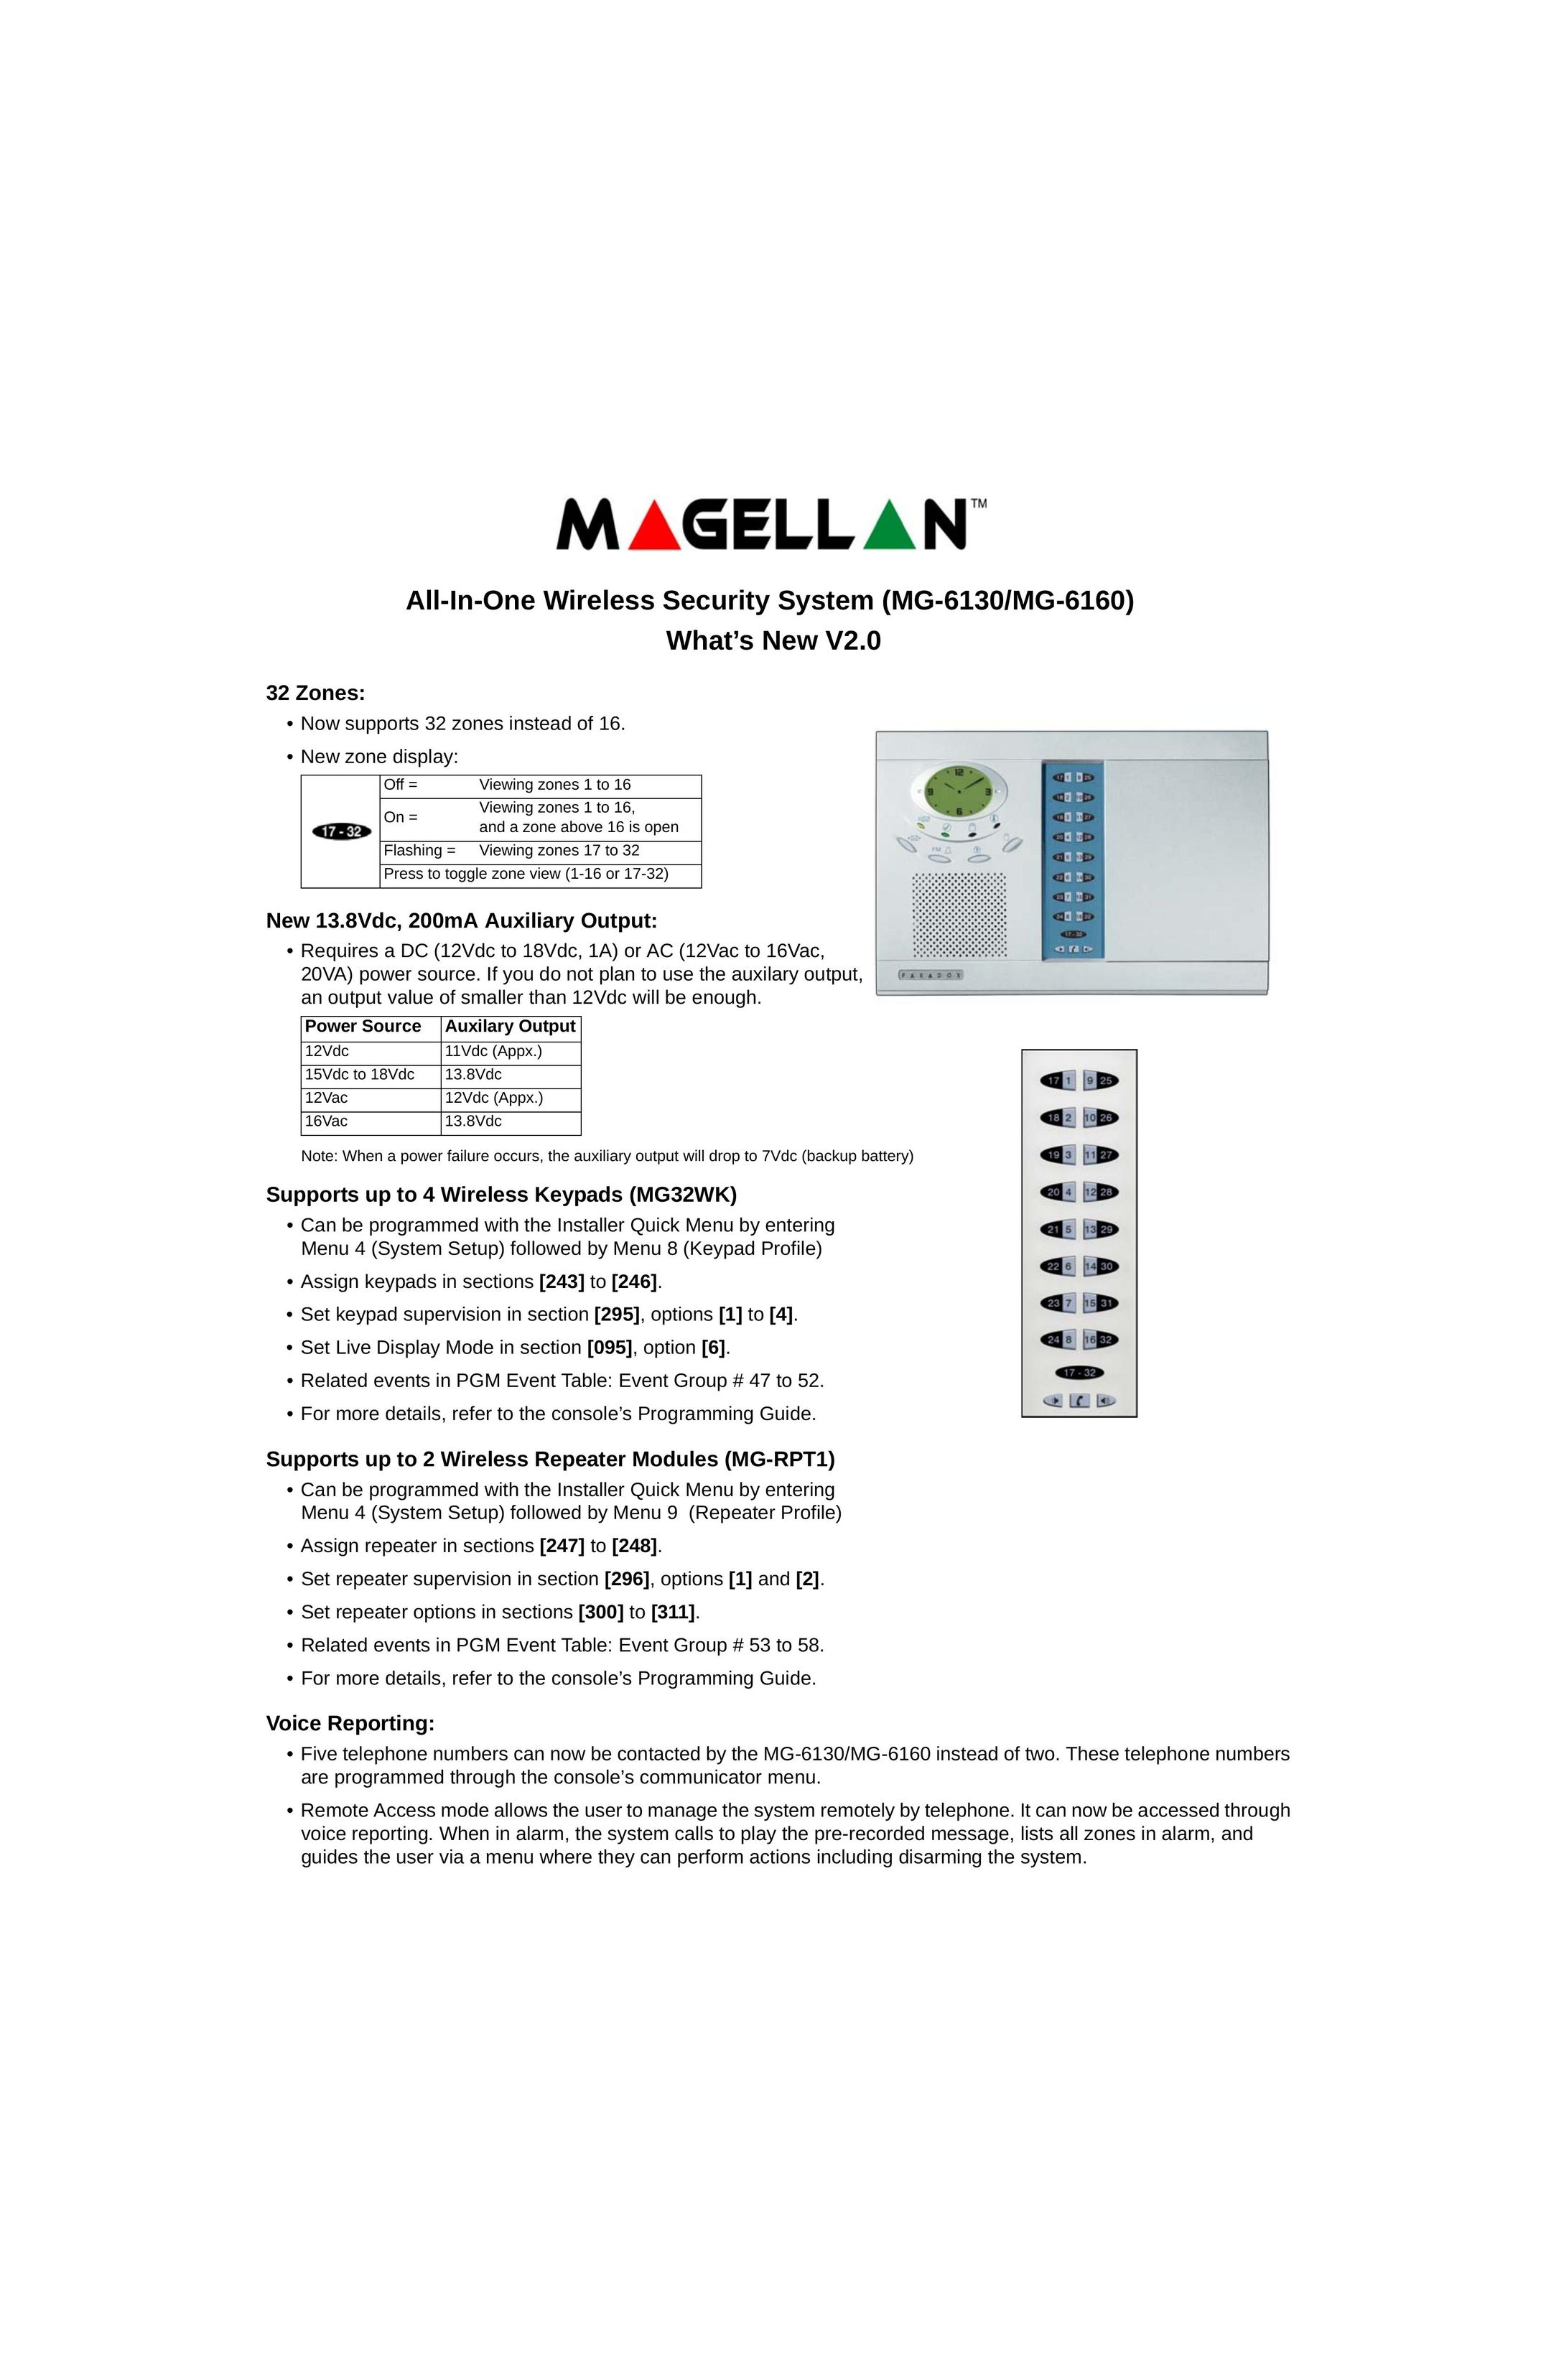 Magellan MG-6130 Home Security System User Manual